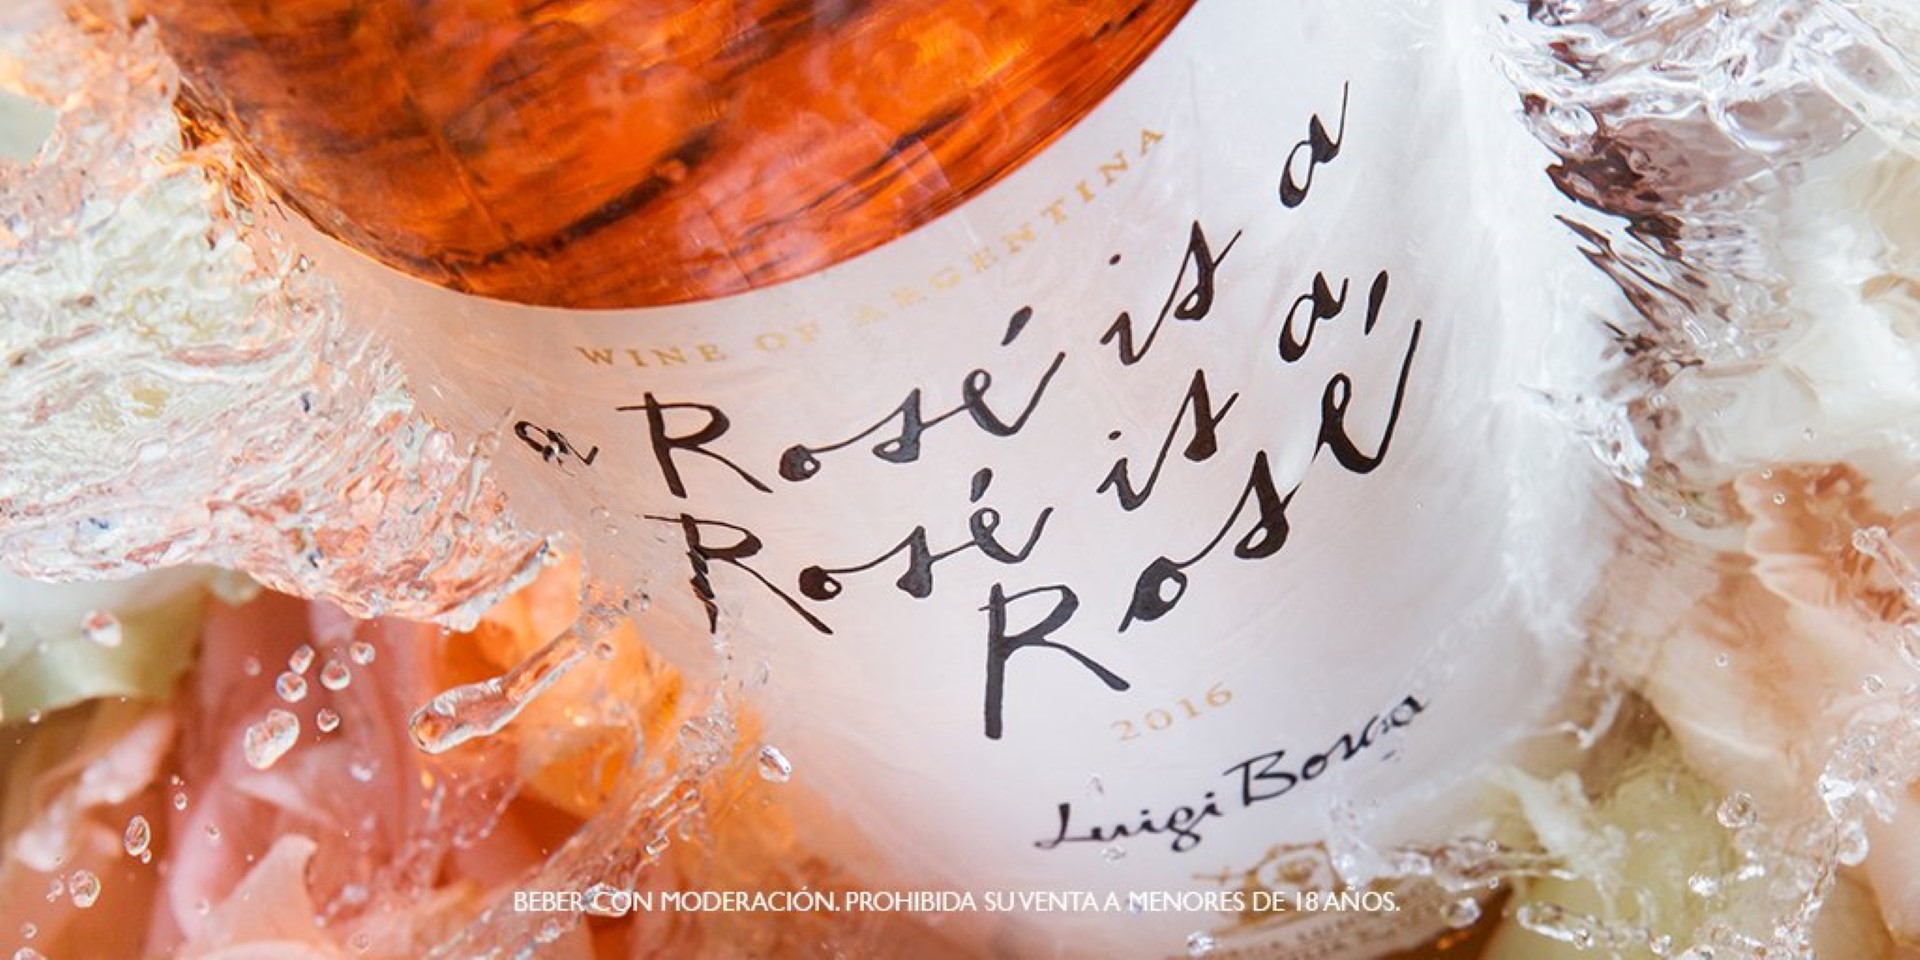 Luigi Bosca Rosé is a Rosé 2022